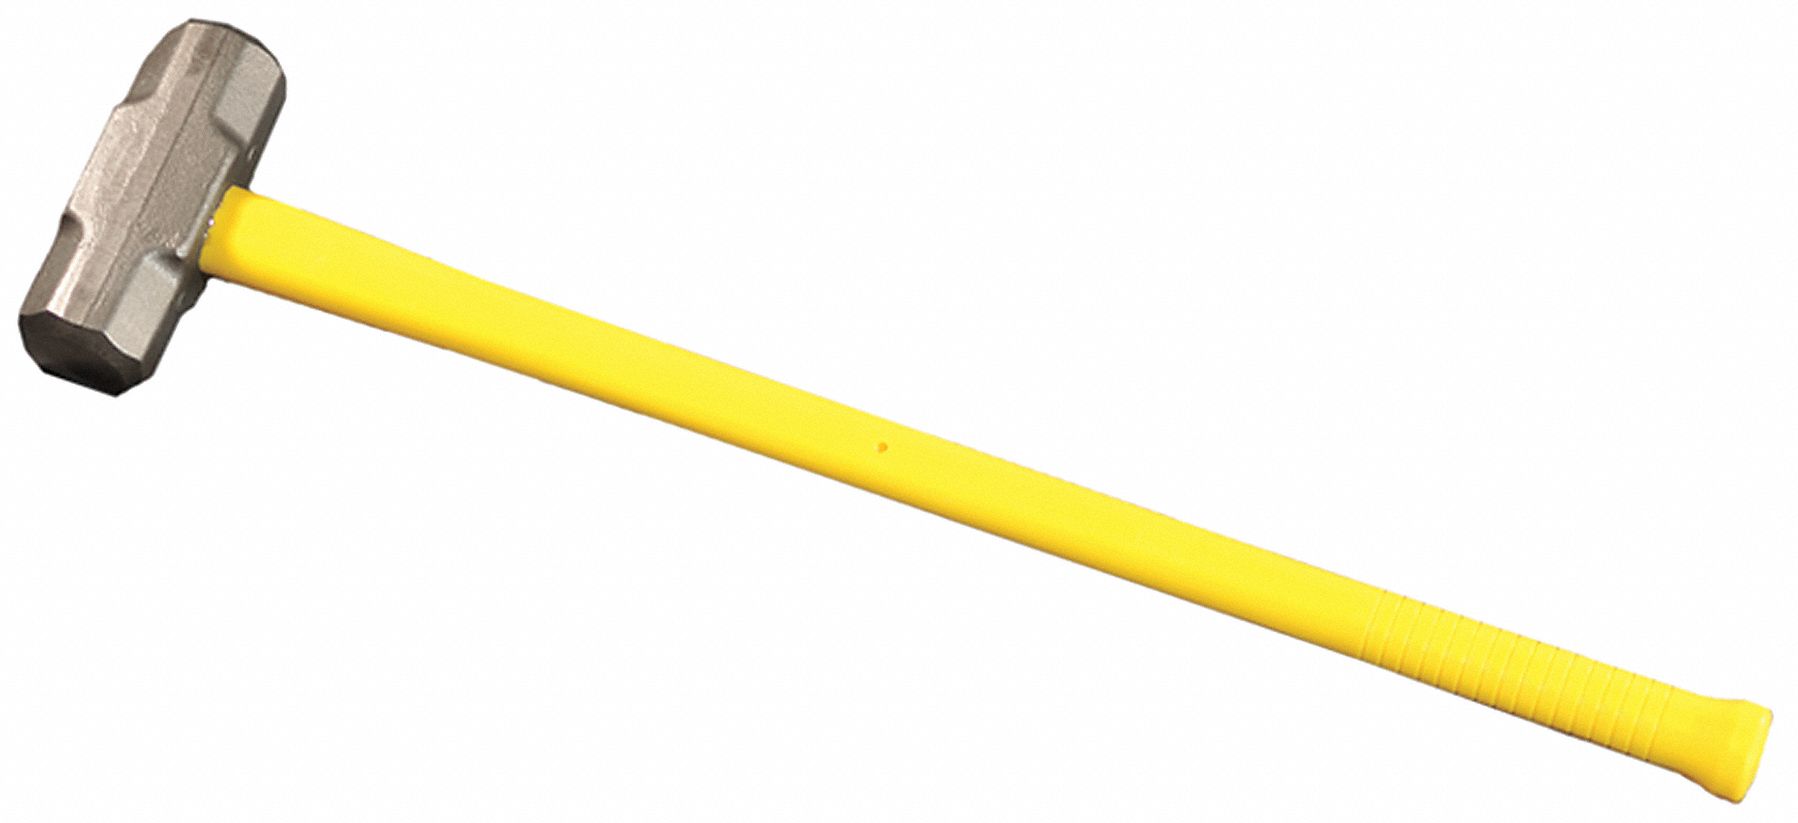 Double Face Sledge Hammer, 12 lb. Head Weight, 2-5/8" Head Width, 34" Overall Length